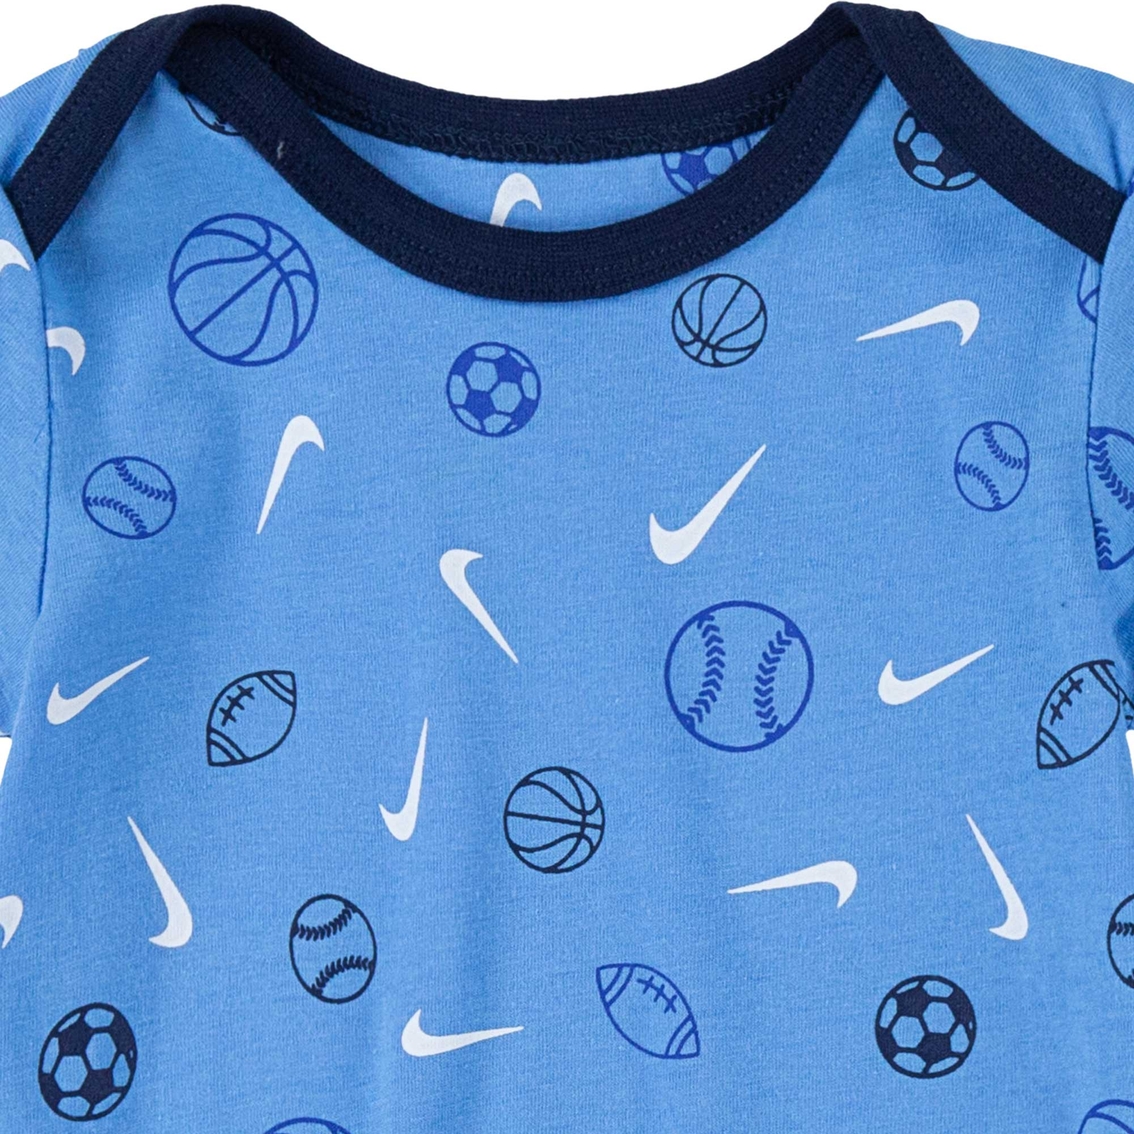 Nike Infant Boys Sportball Bodysuit and Pants 2 pc. Set - Image 3 of 5